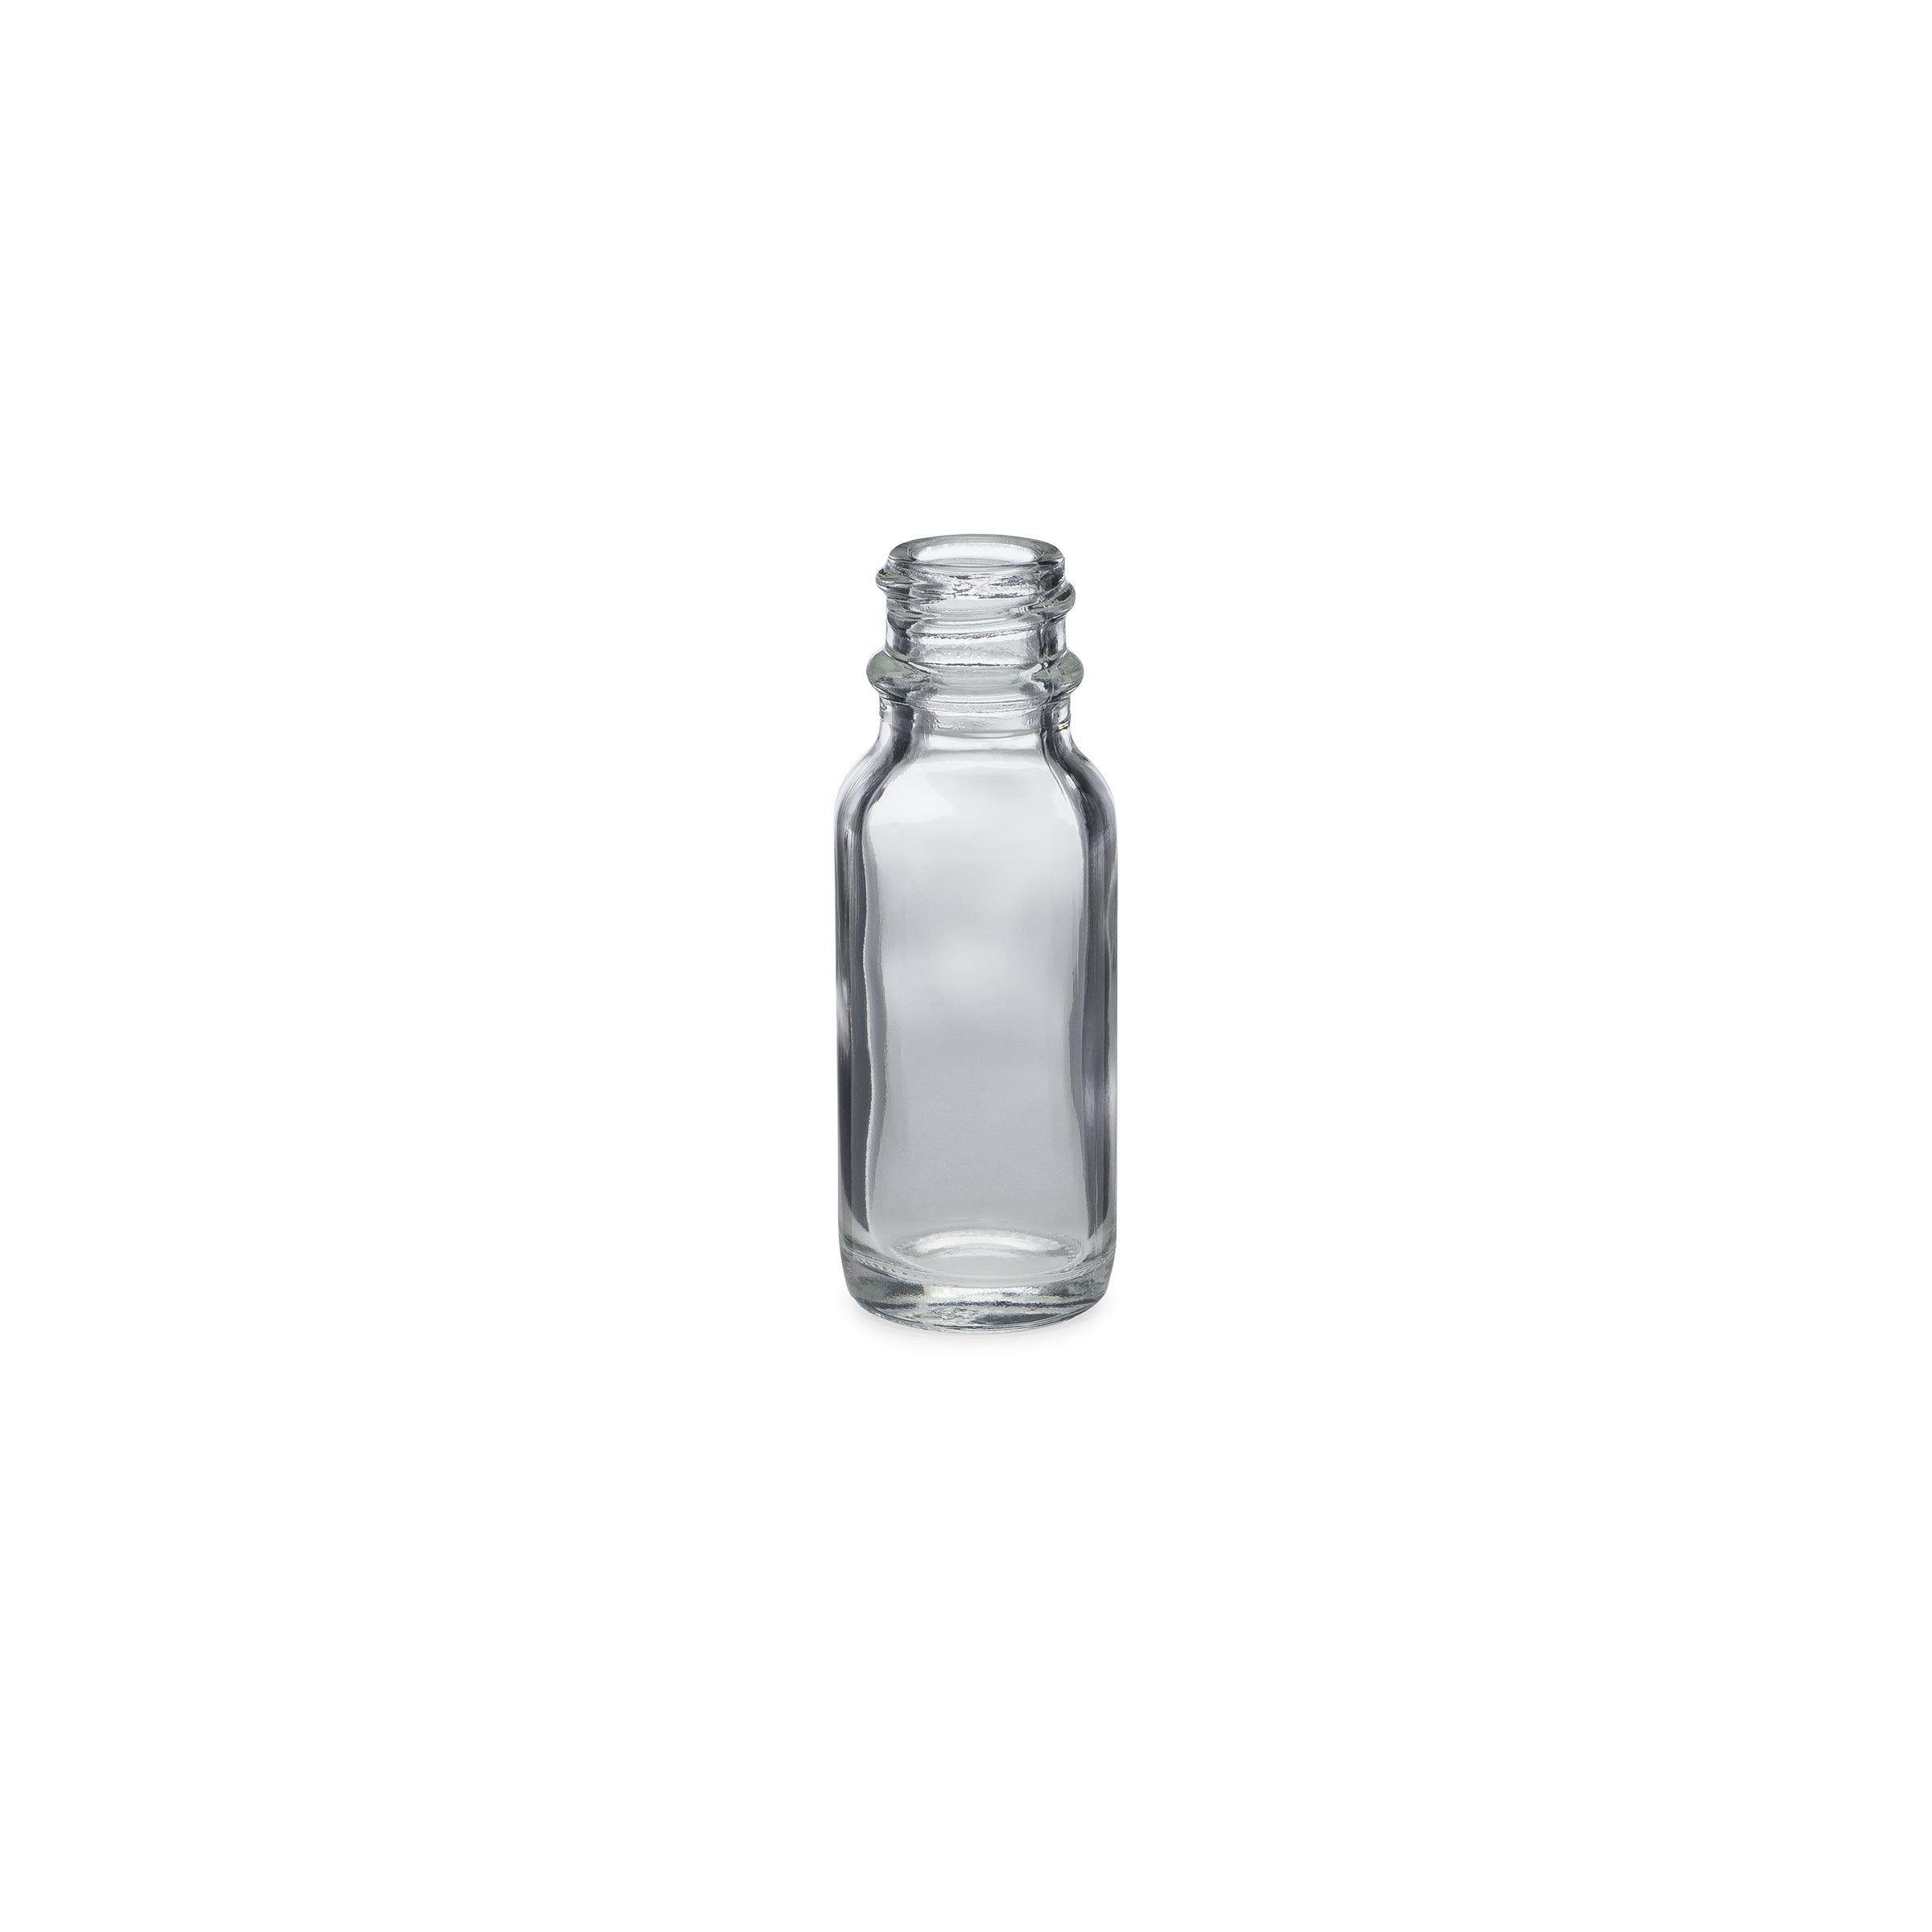 0.5oz/15ml Flint Boston Round Bottle